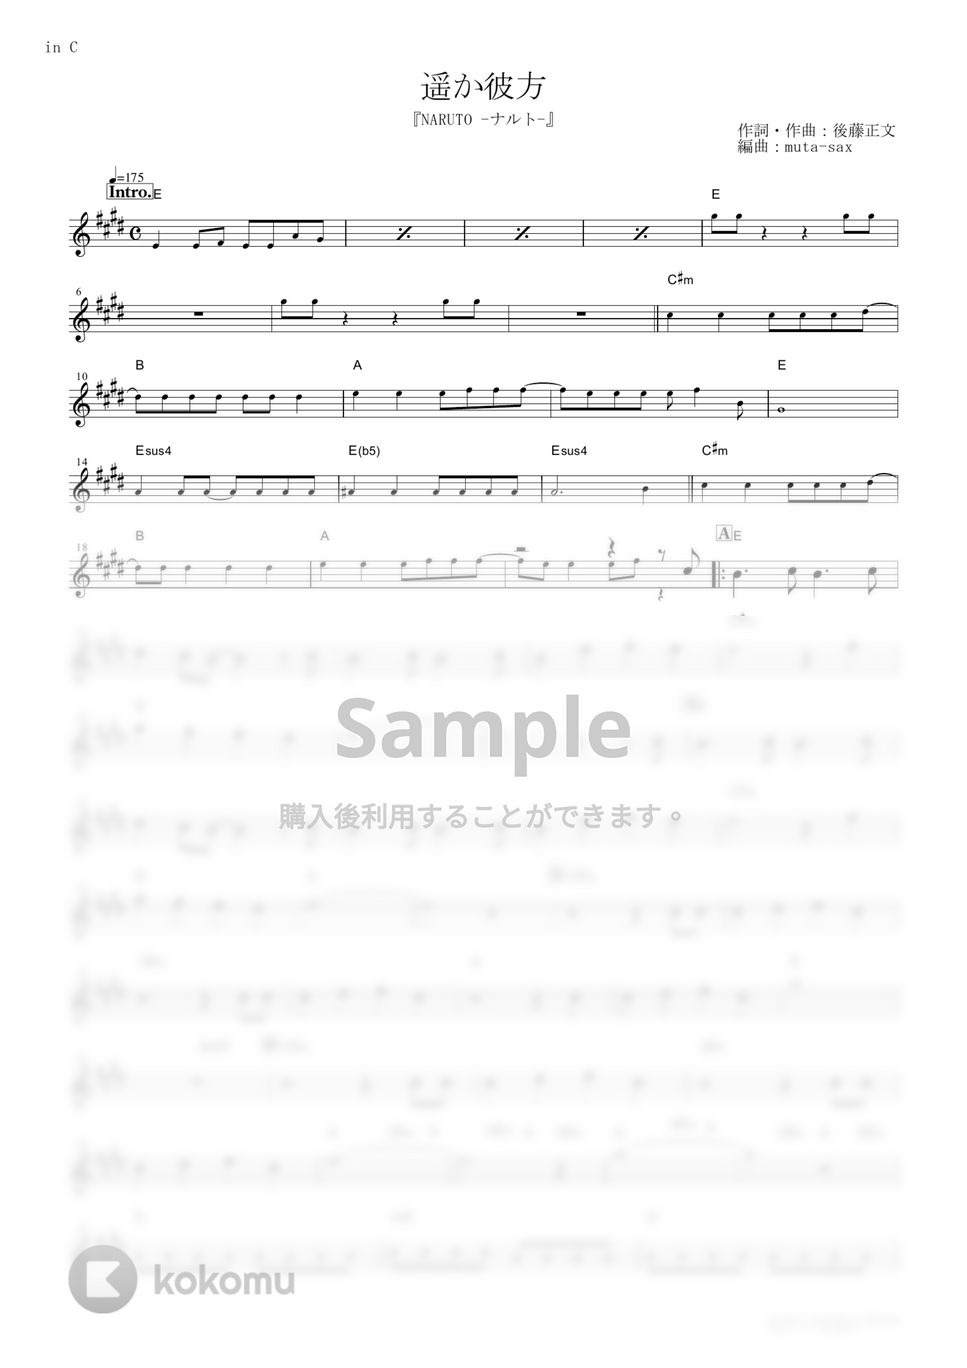 ASIAN KUNG-FU GENERATION - 遥か彼方 (『NARUTO -ナルト-』 / in C) by muta-sax